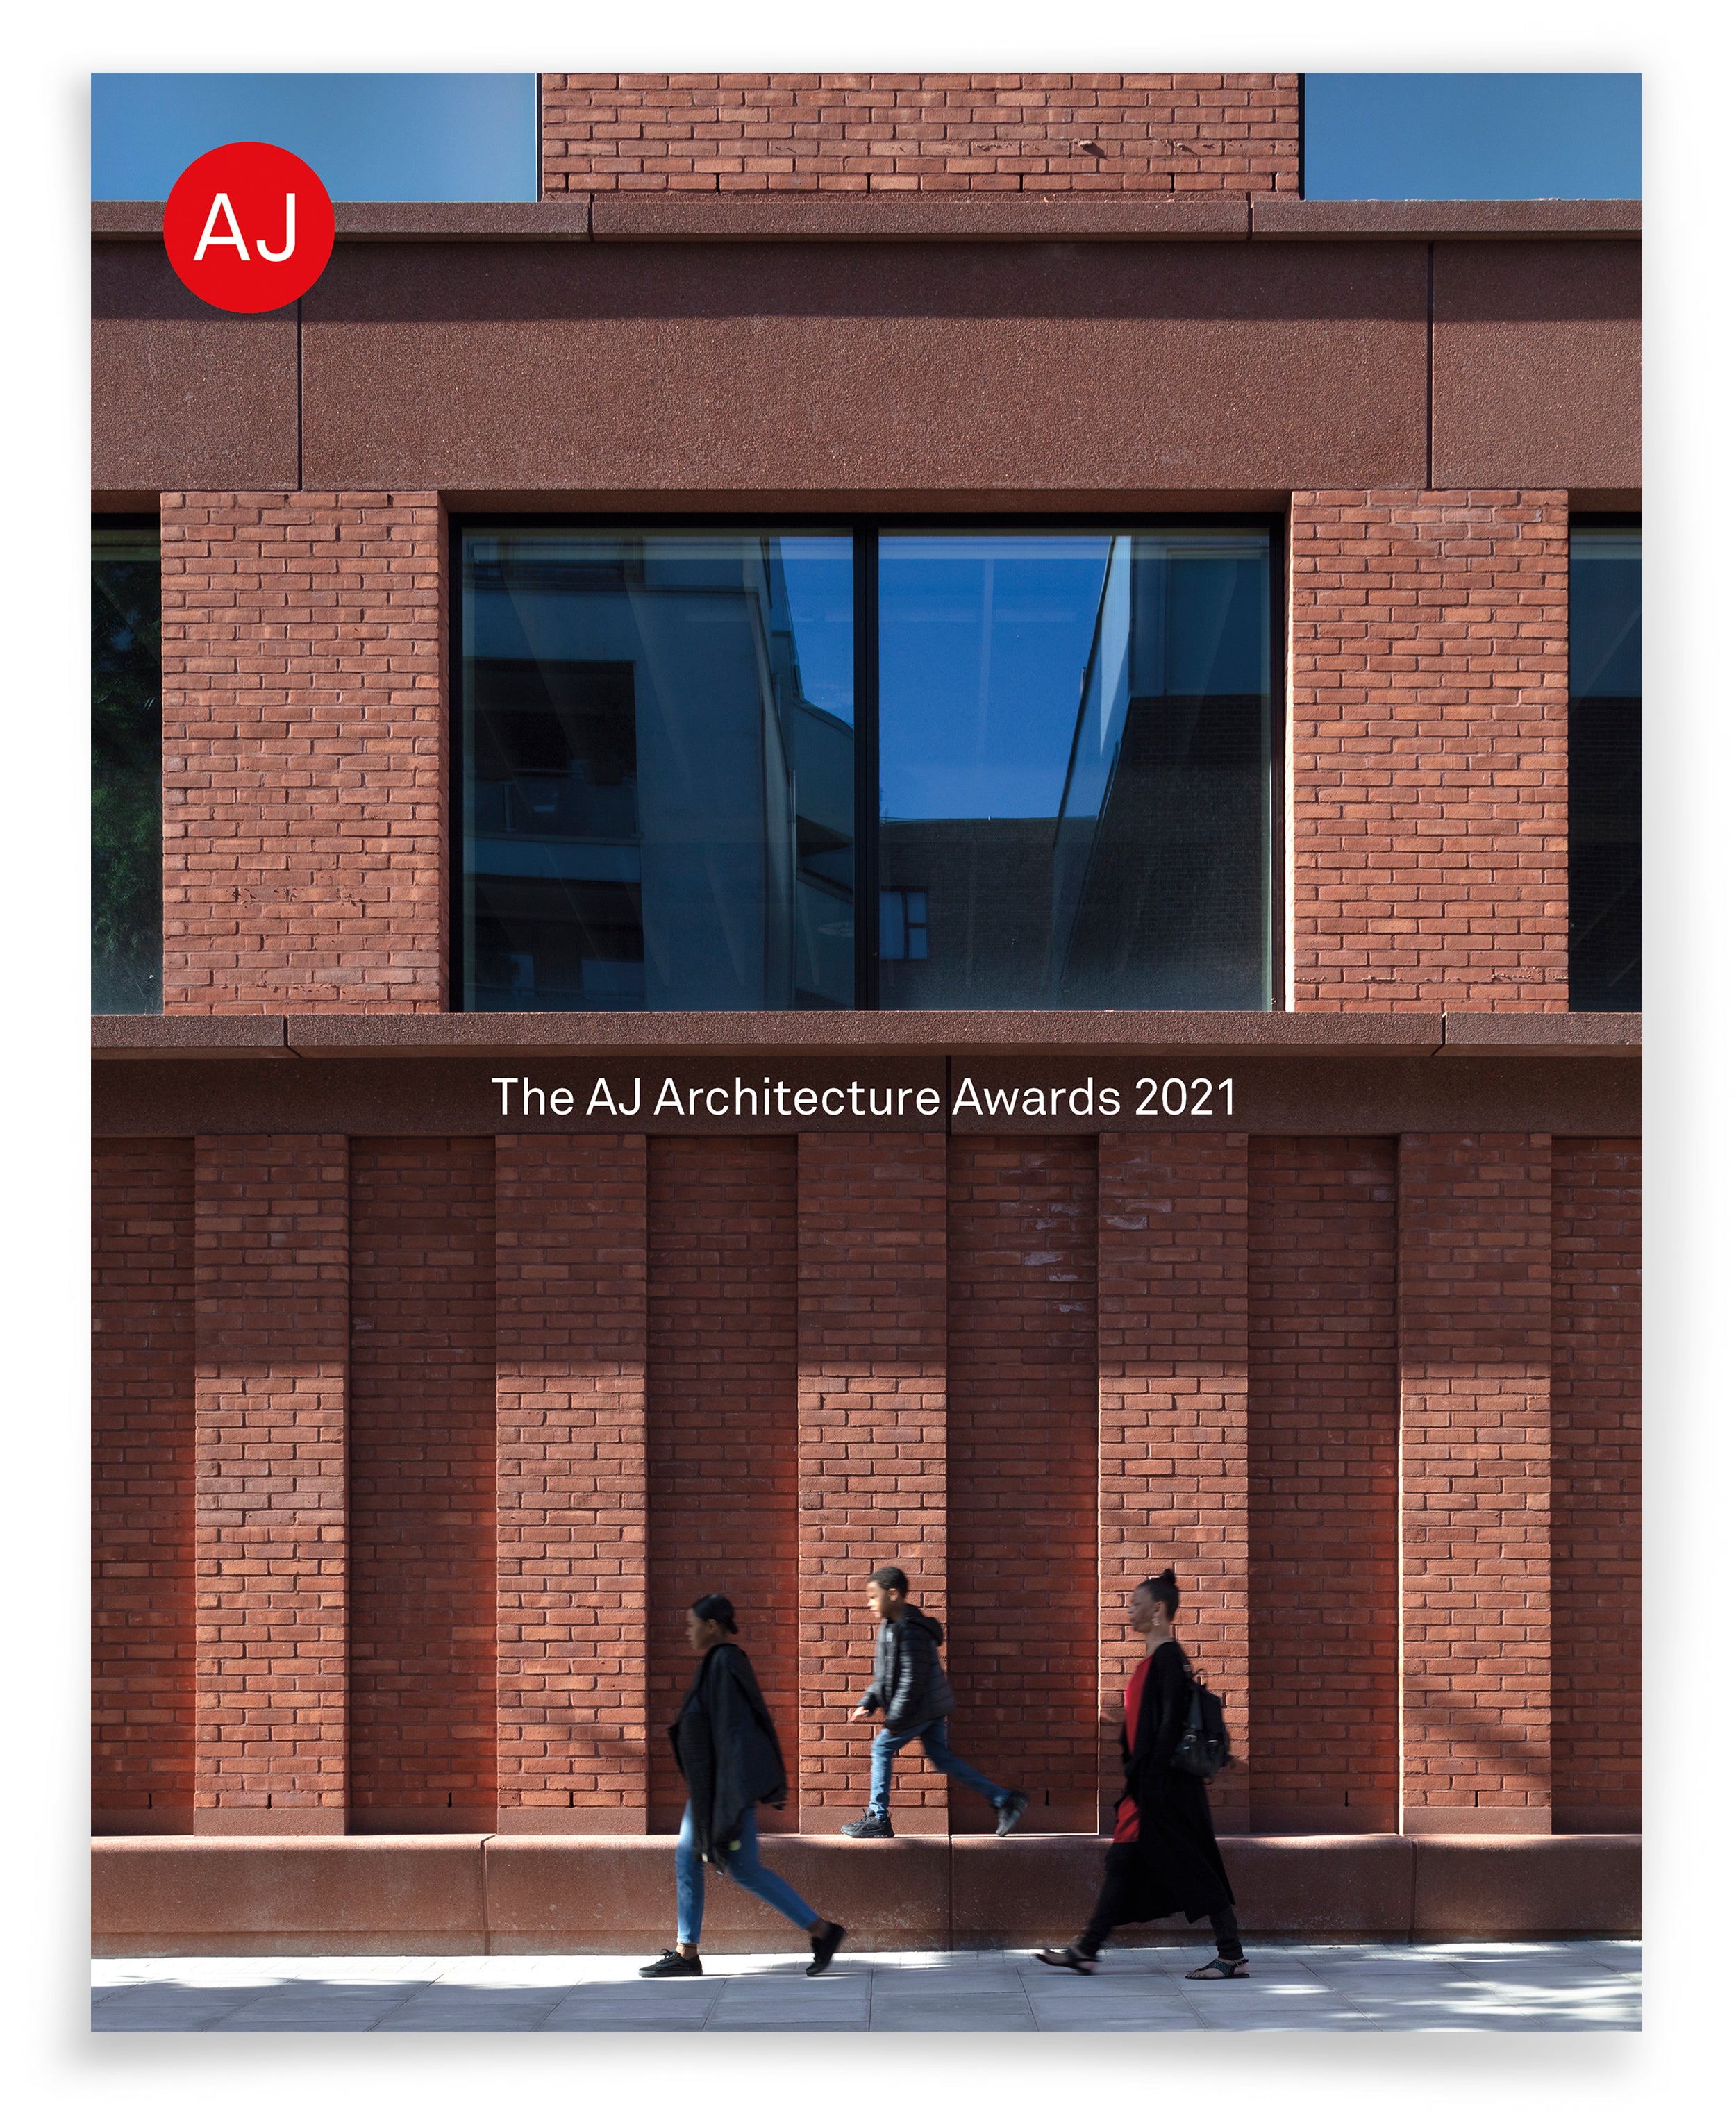 AJ 18.11.21: AJ Architecture Awards